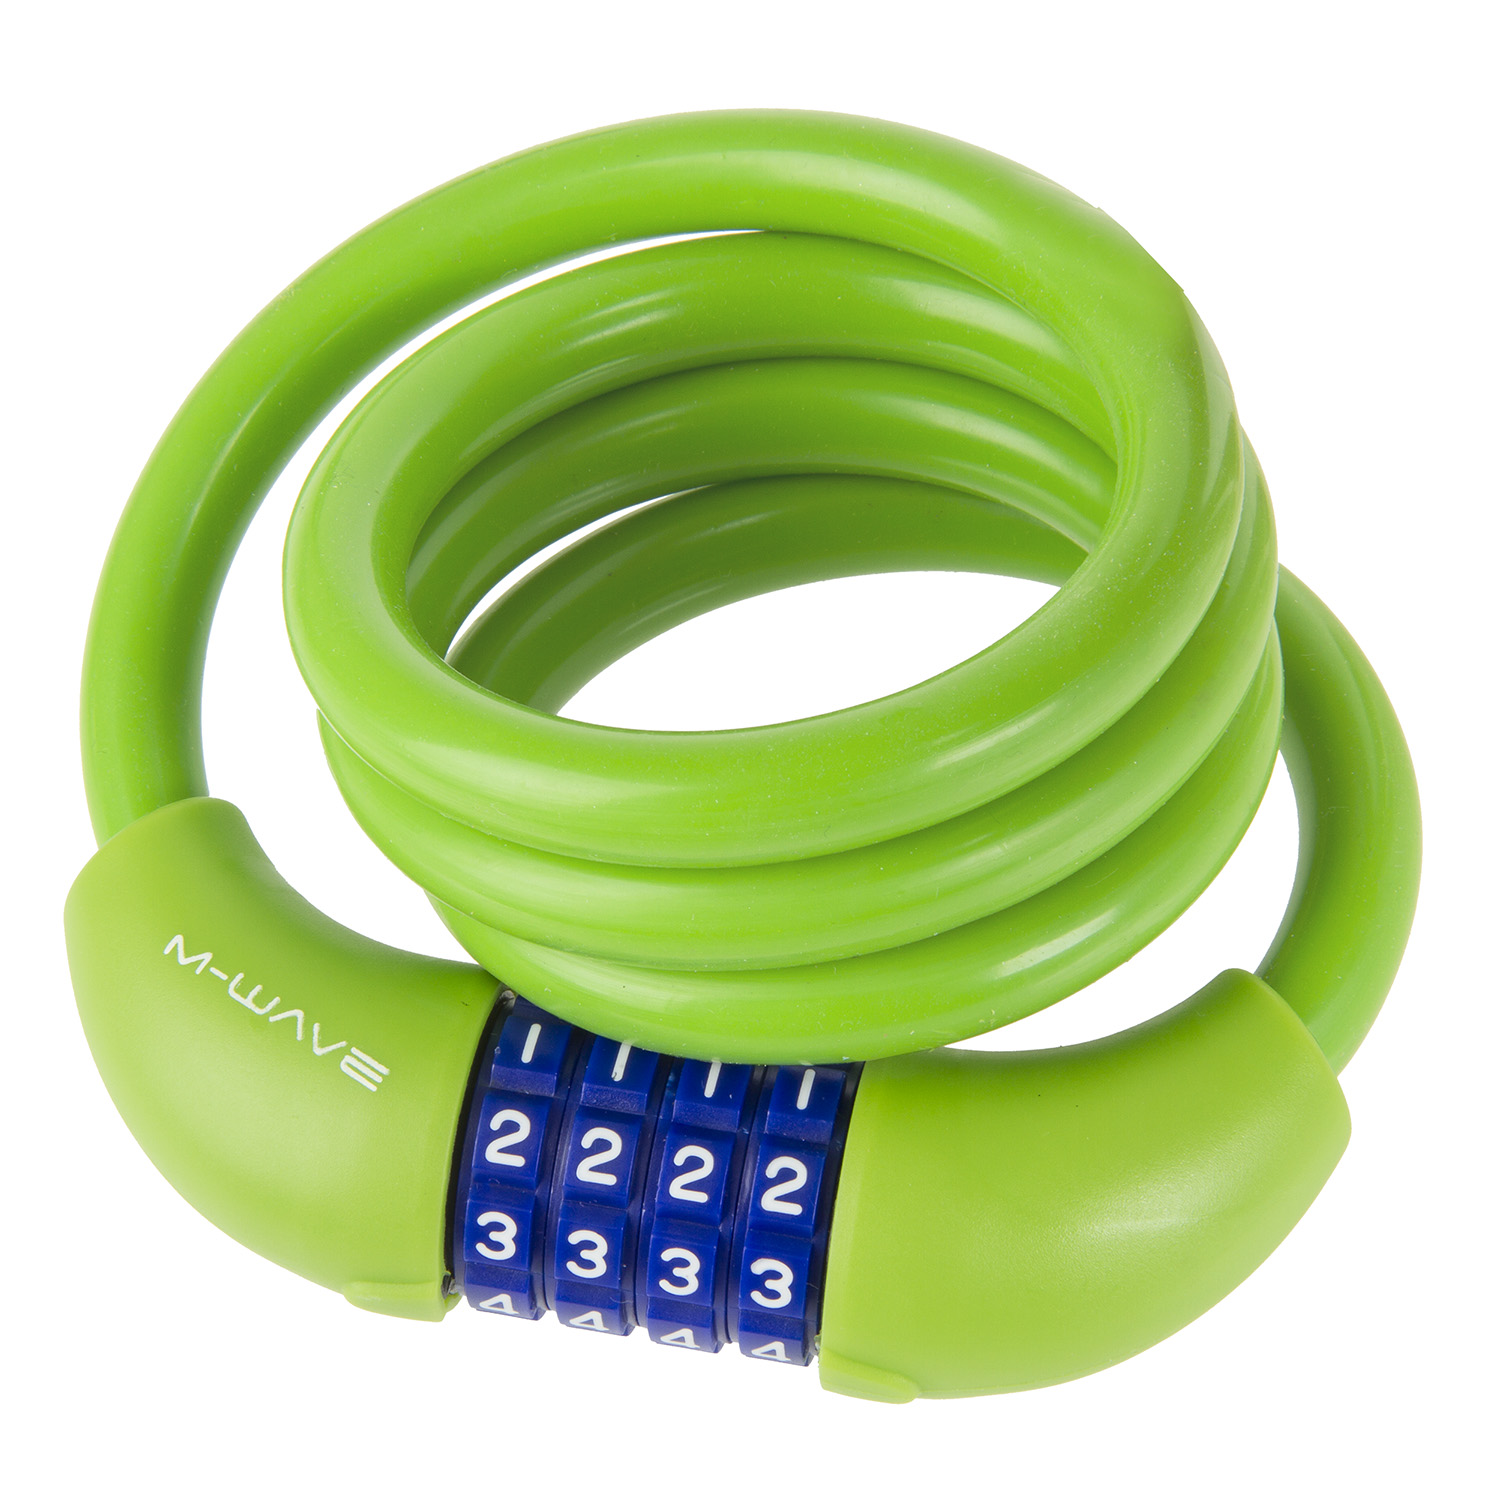 Zahlen-Spiralschloss Silikon 12 mm x 1000 mm in Grün neon